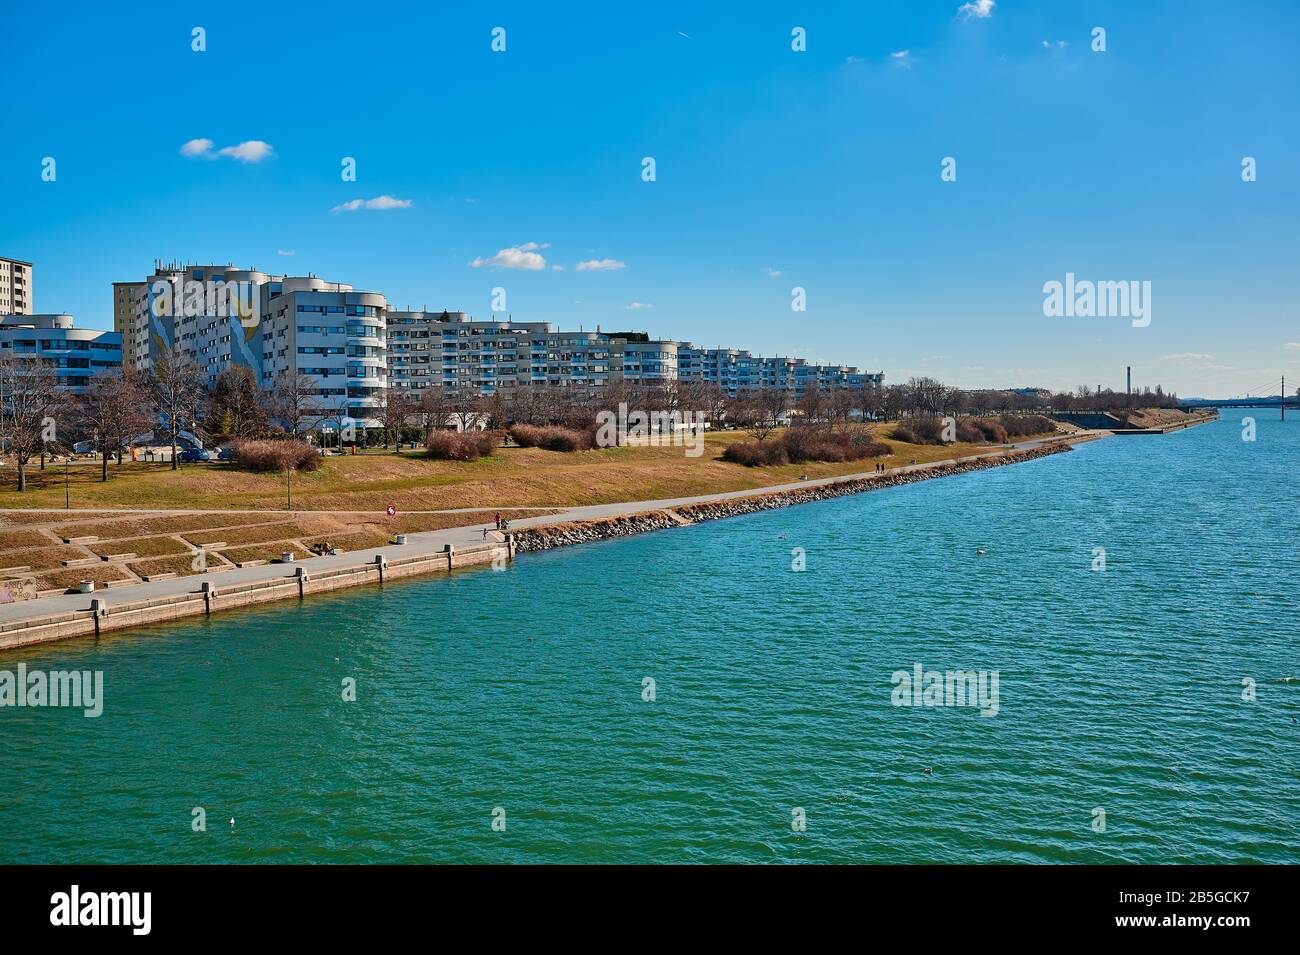 Vienna, Austria - Feb 20, 2020: Modern apartment houses on the Danube island in Vienna, Austria on a sunny day. Stock Photo